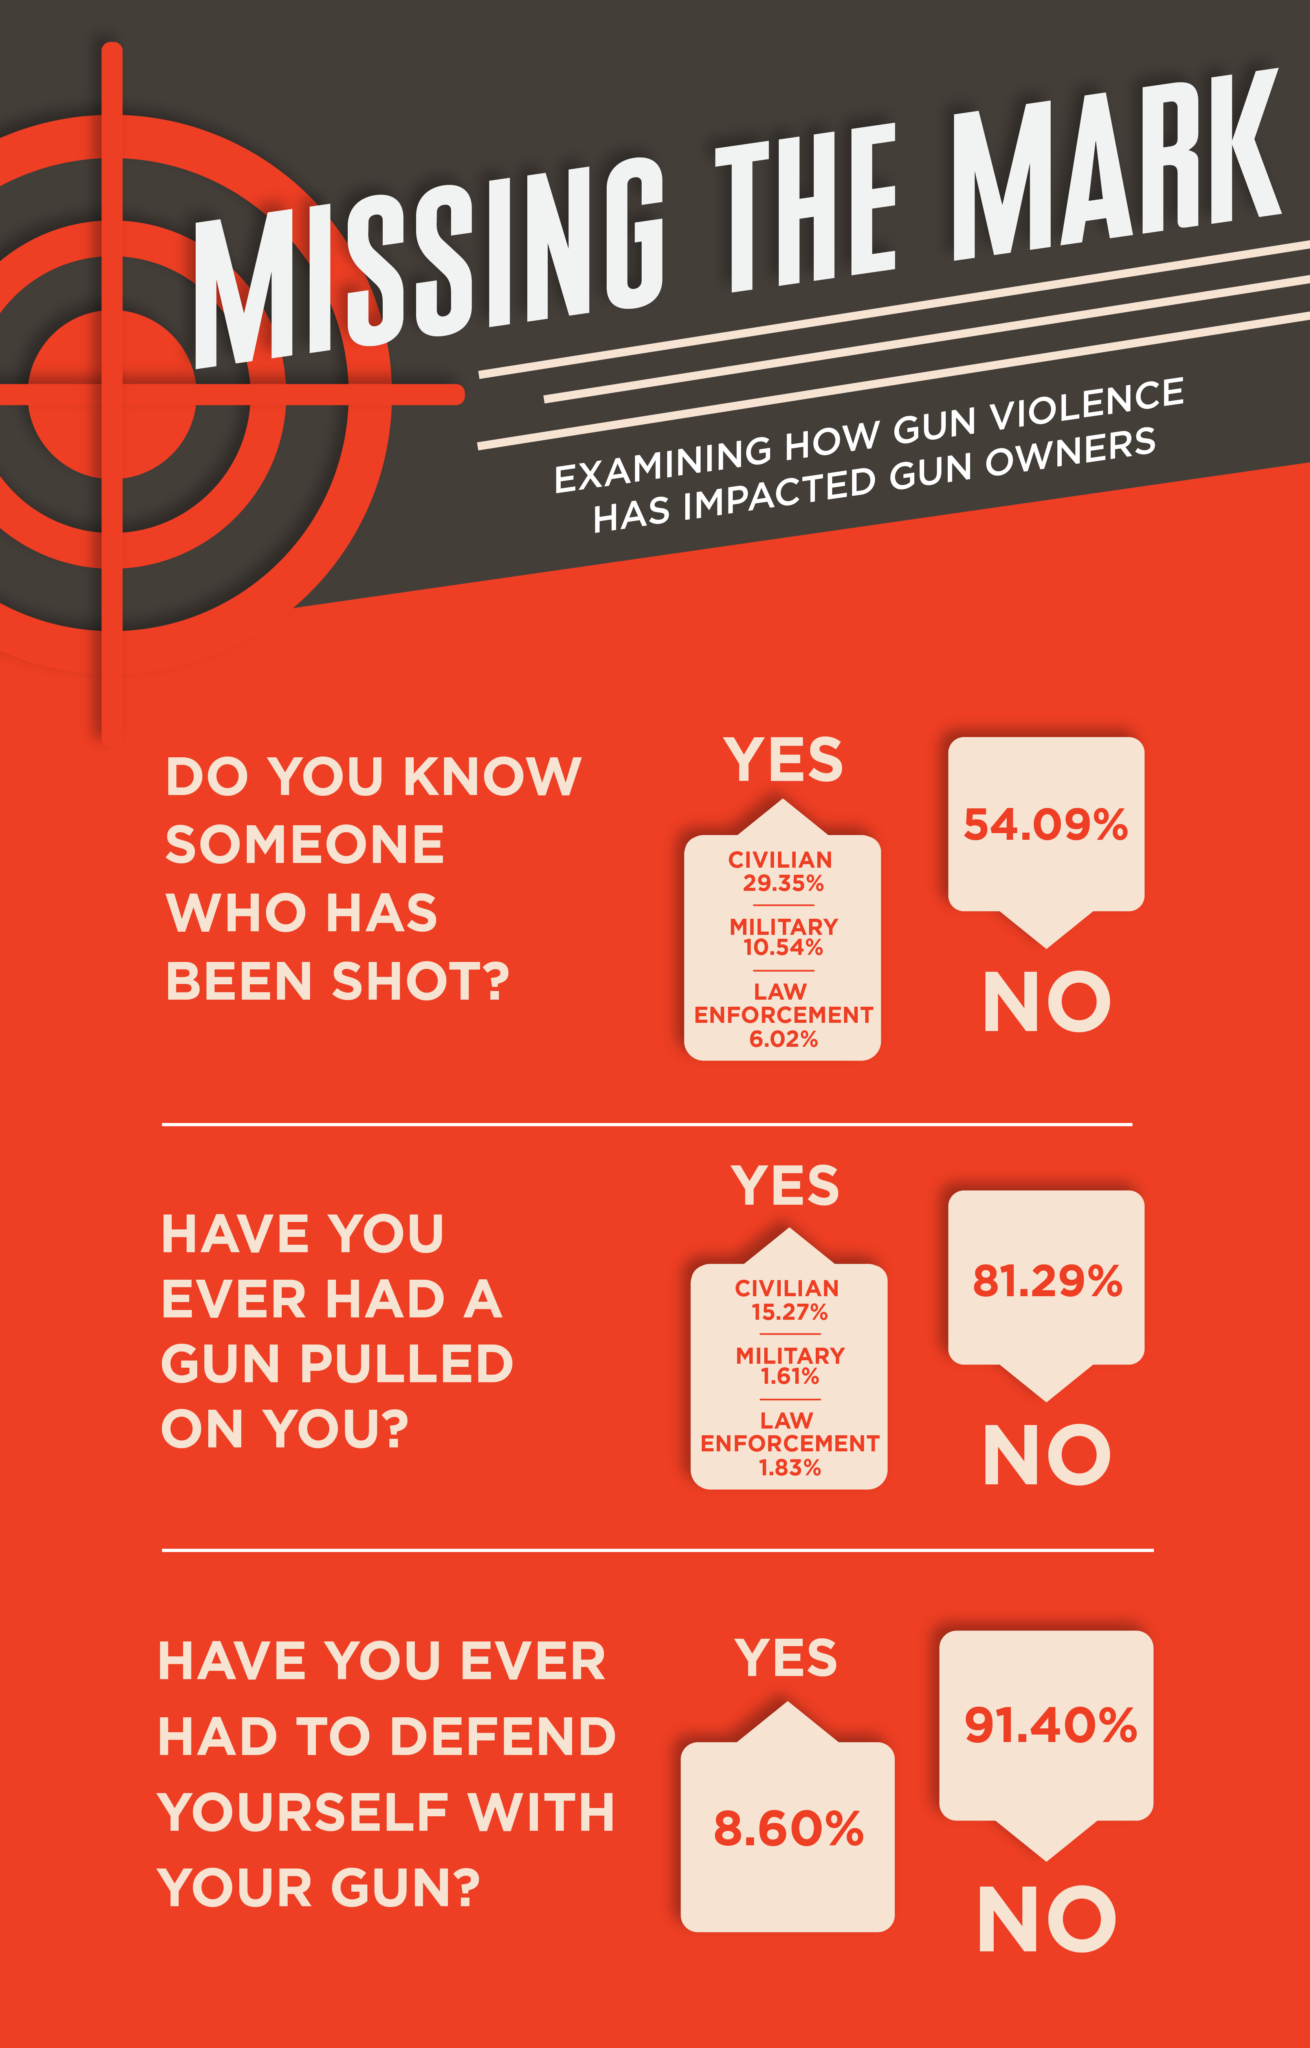 gun violence impact on gun owners